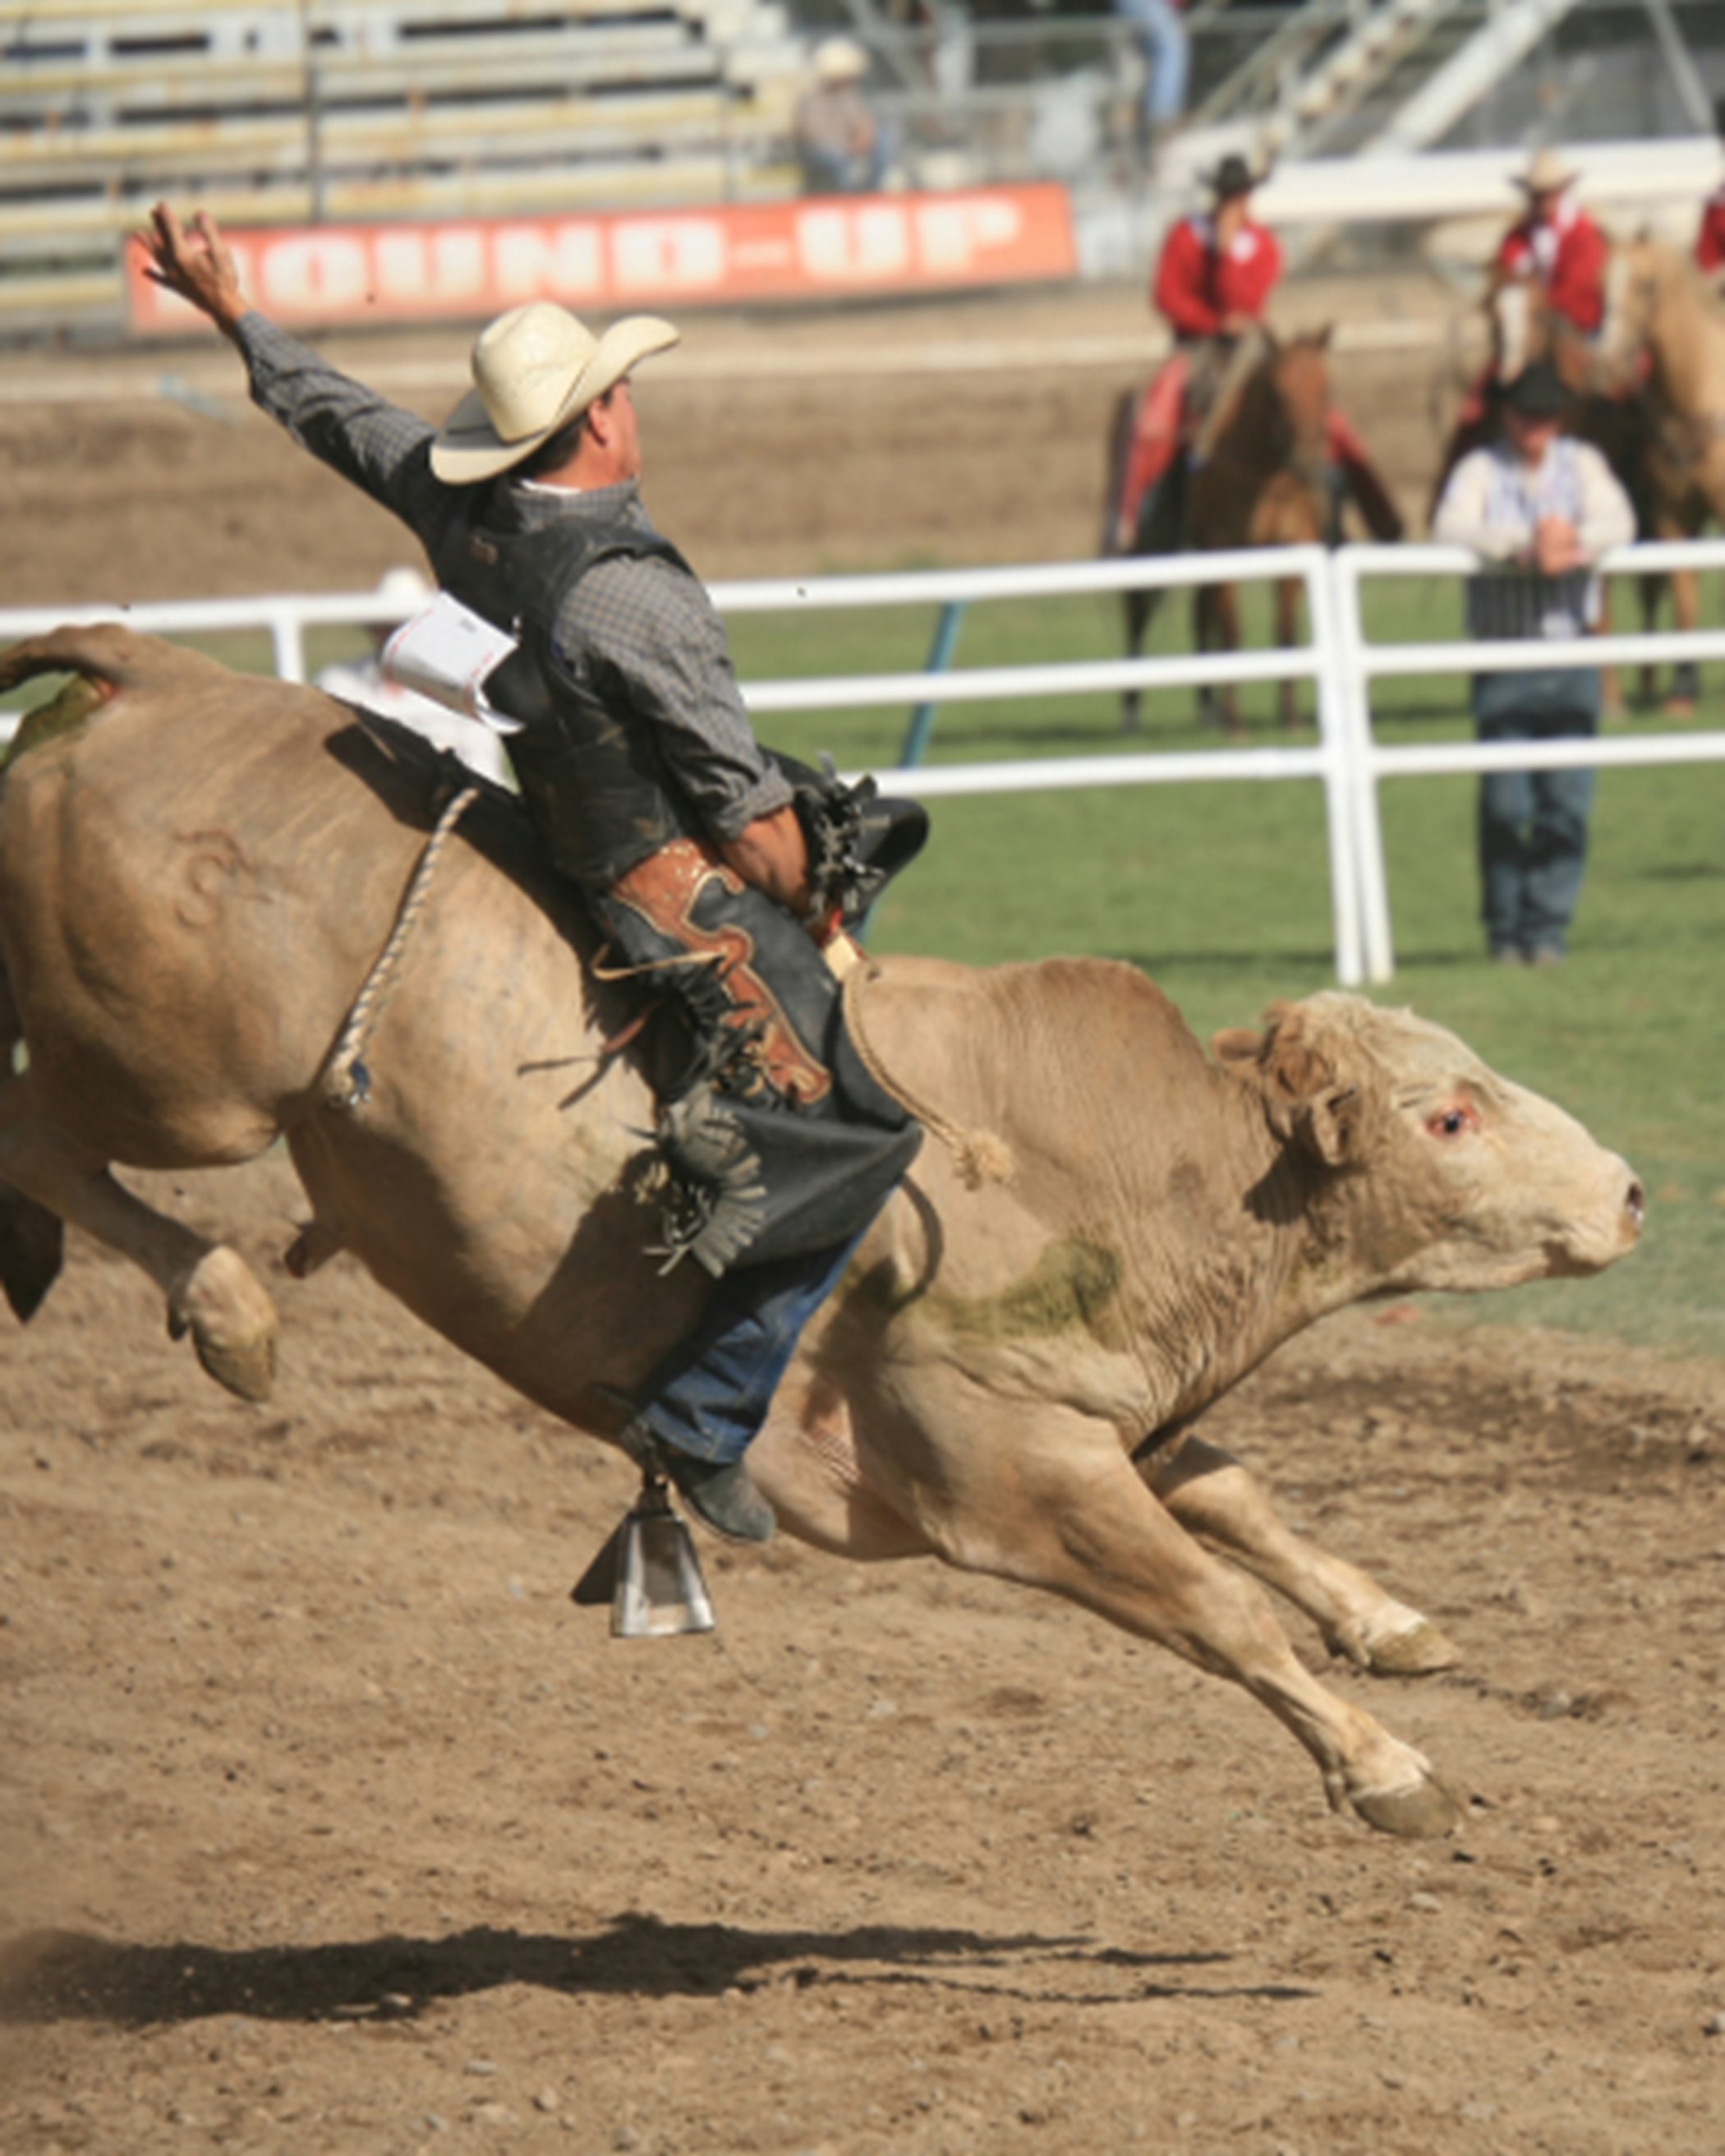 Cowboy riding a bull